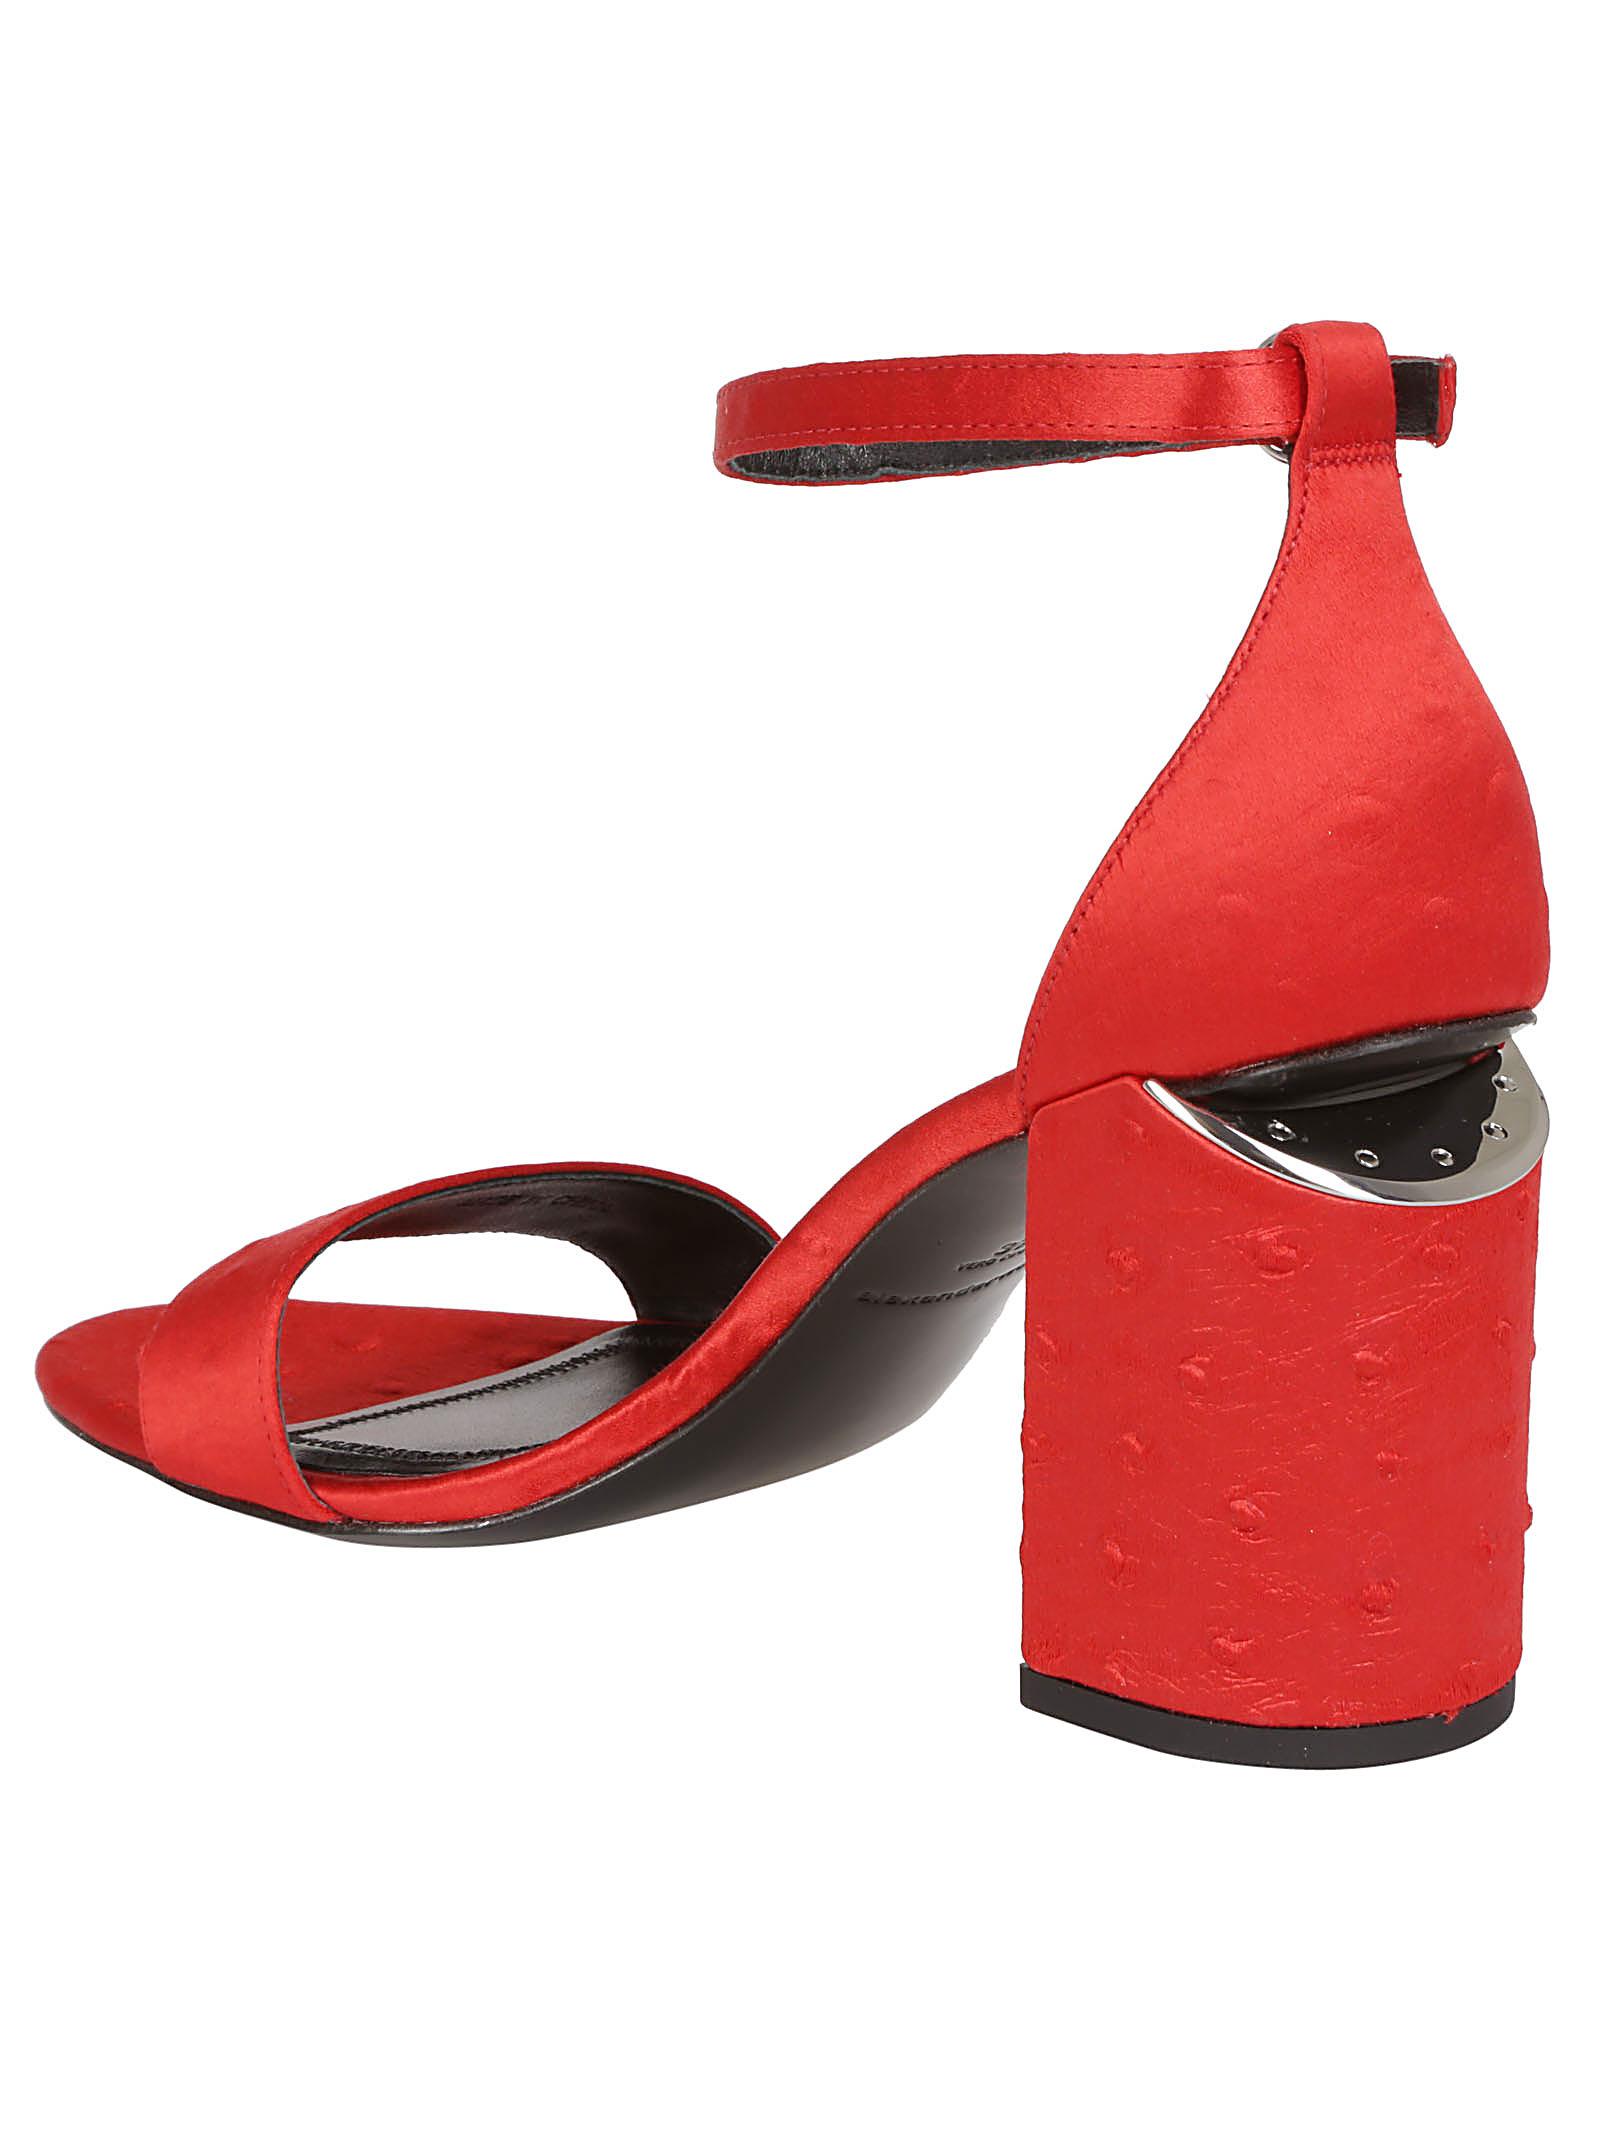 alexander wang red heels